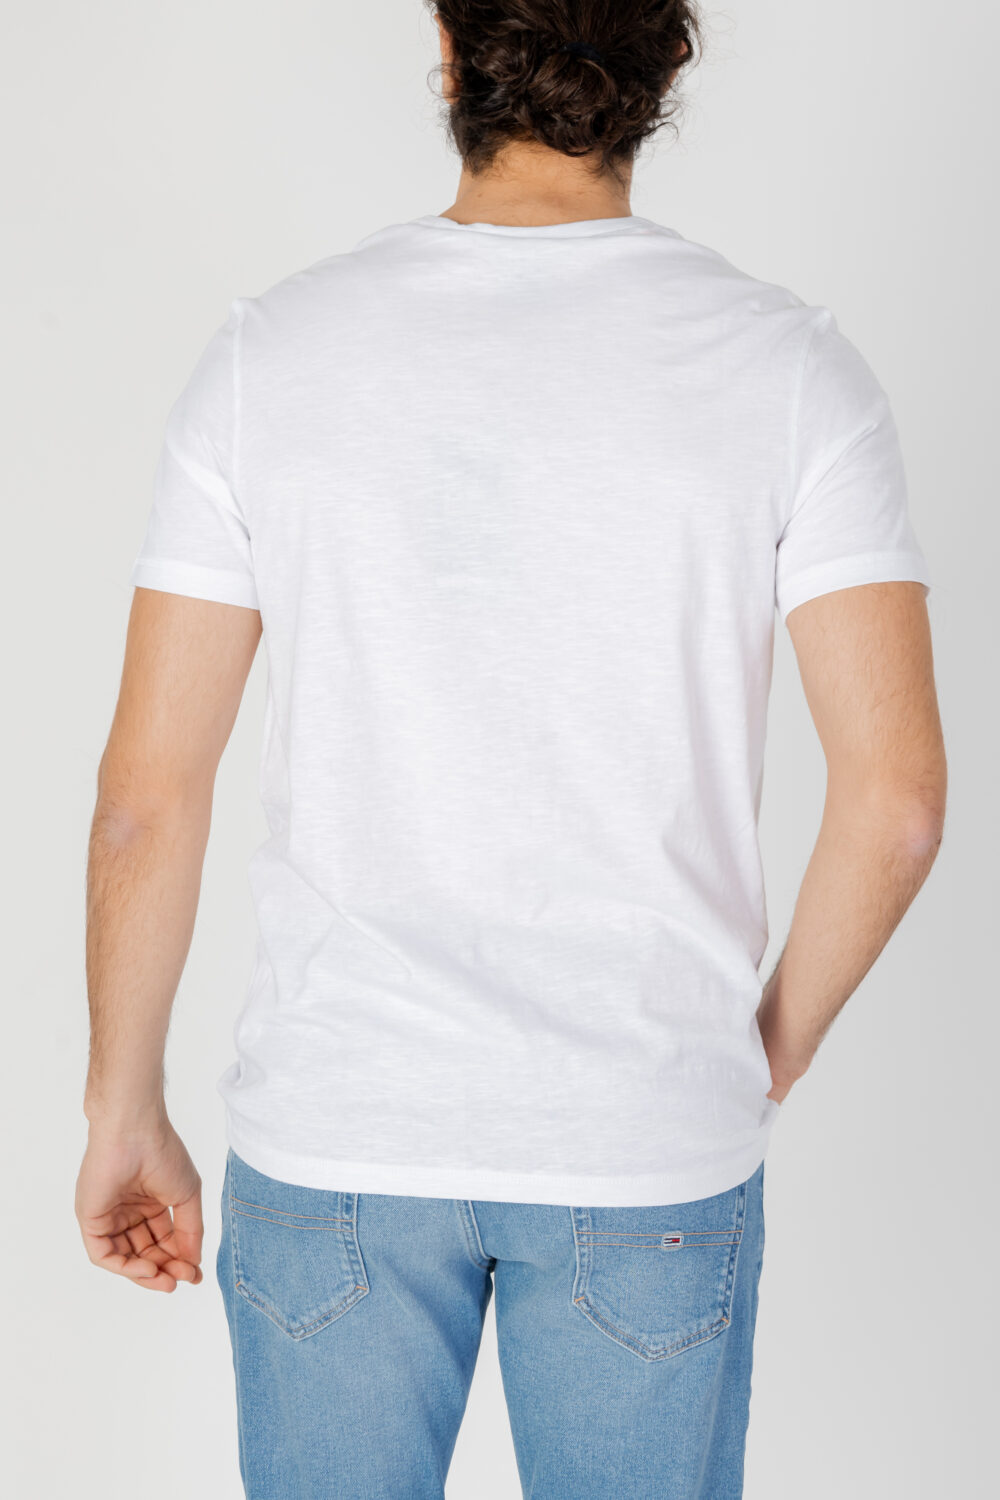 T-shirt Boss Tegood 10240843 01 Bianco - Foto 3